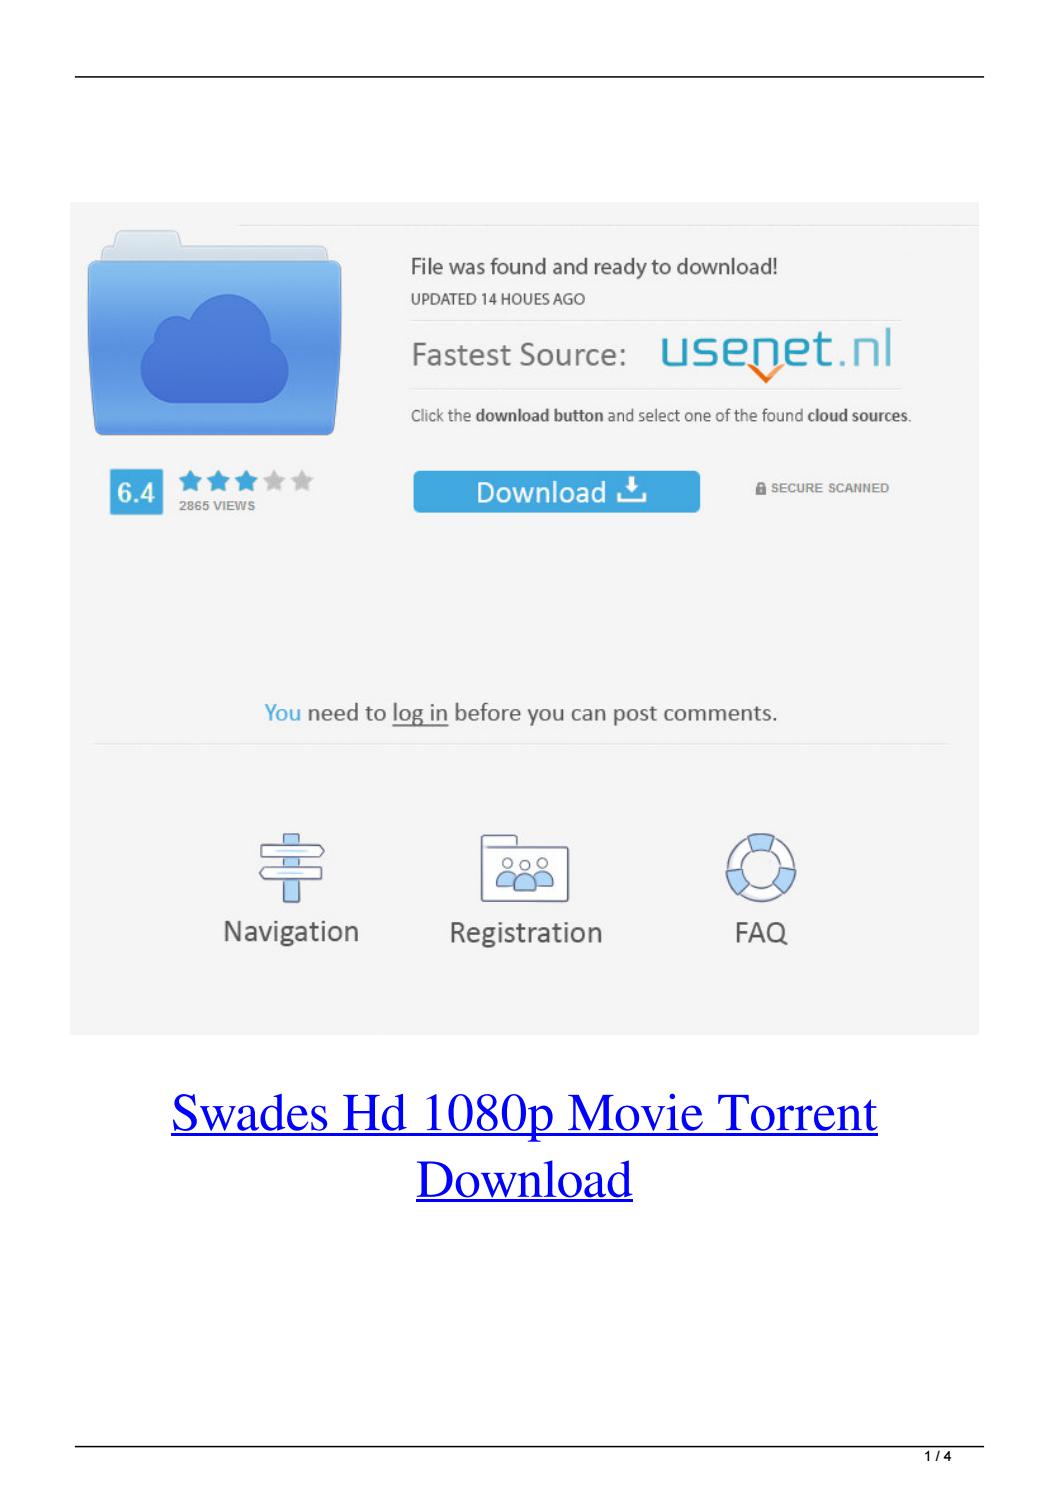 Swades hd 1080p movie torrent